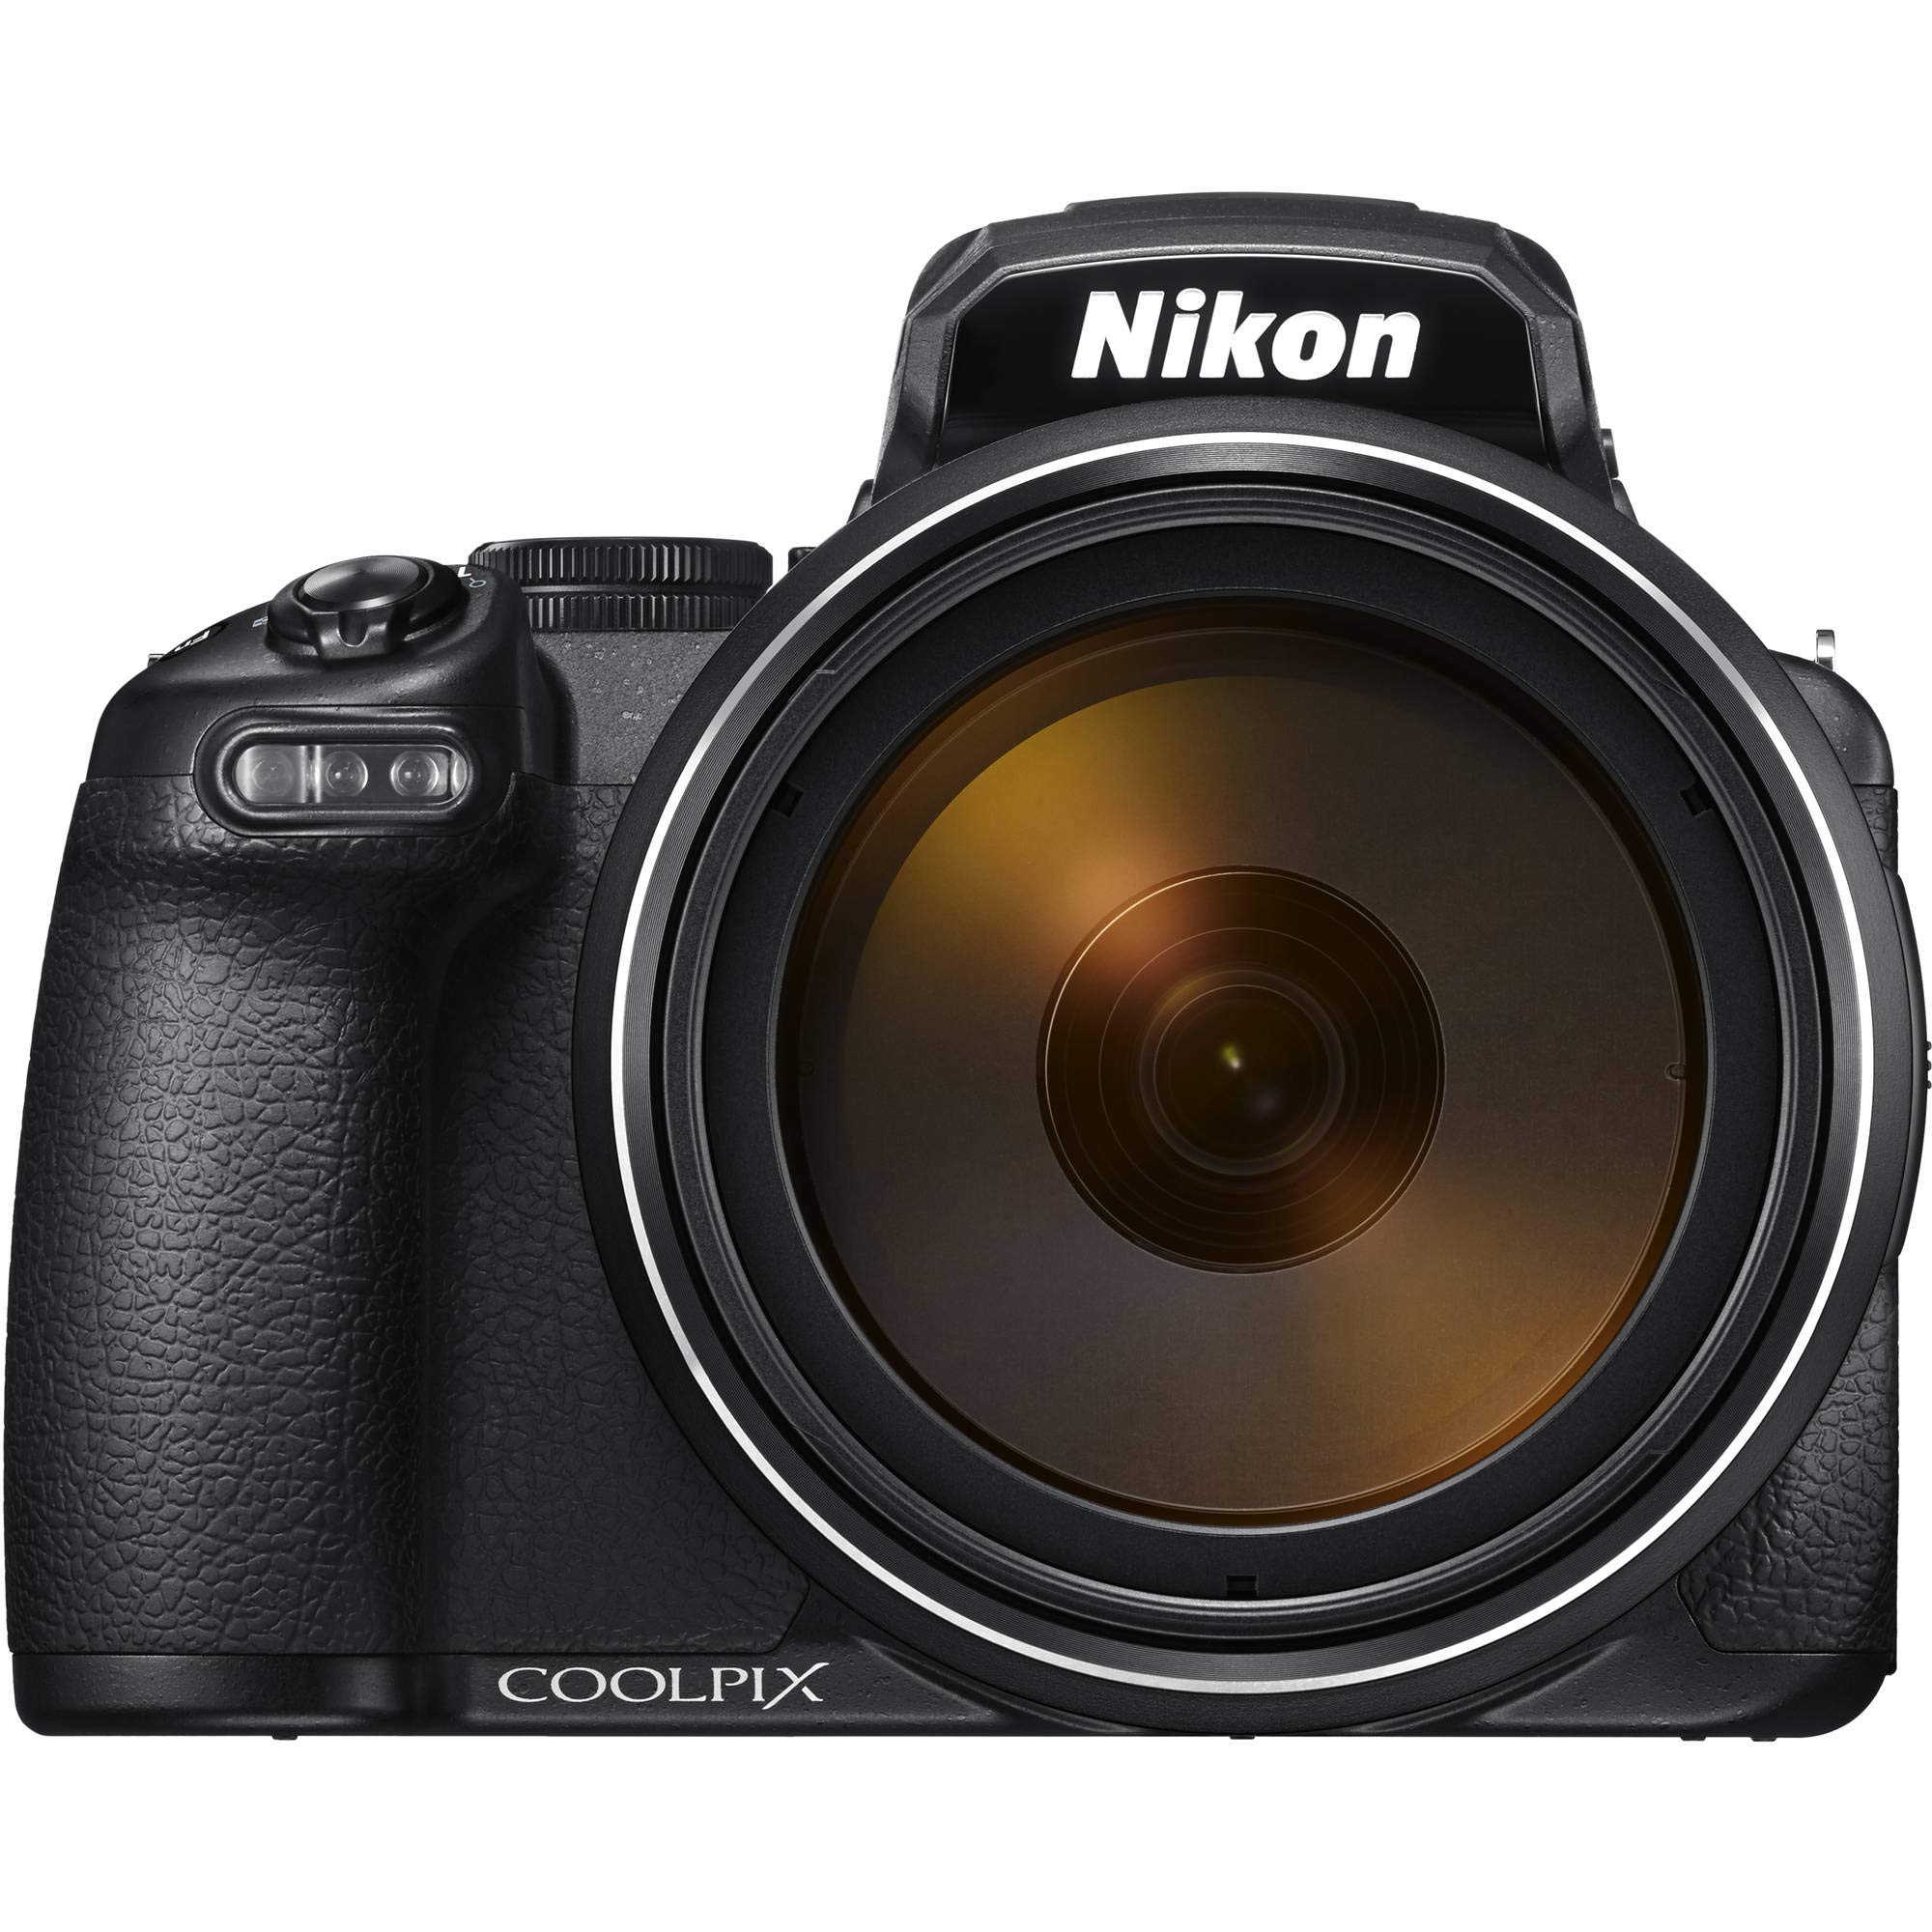 Nikon COOLPIX P1000 Digital Camera + 128GB Memory Card Extreme Bundle International Model